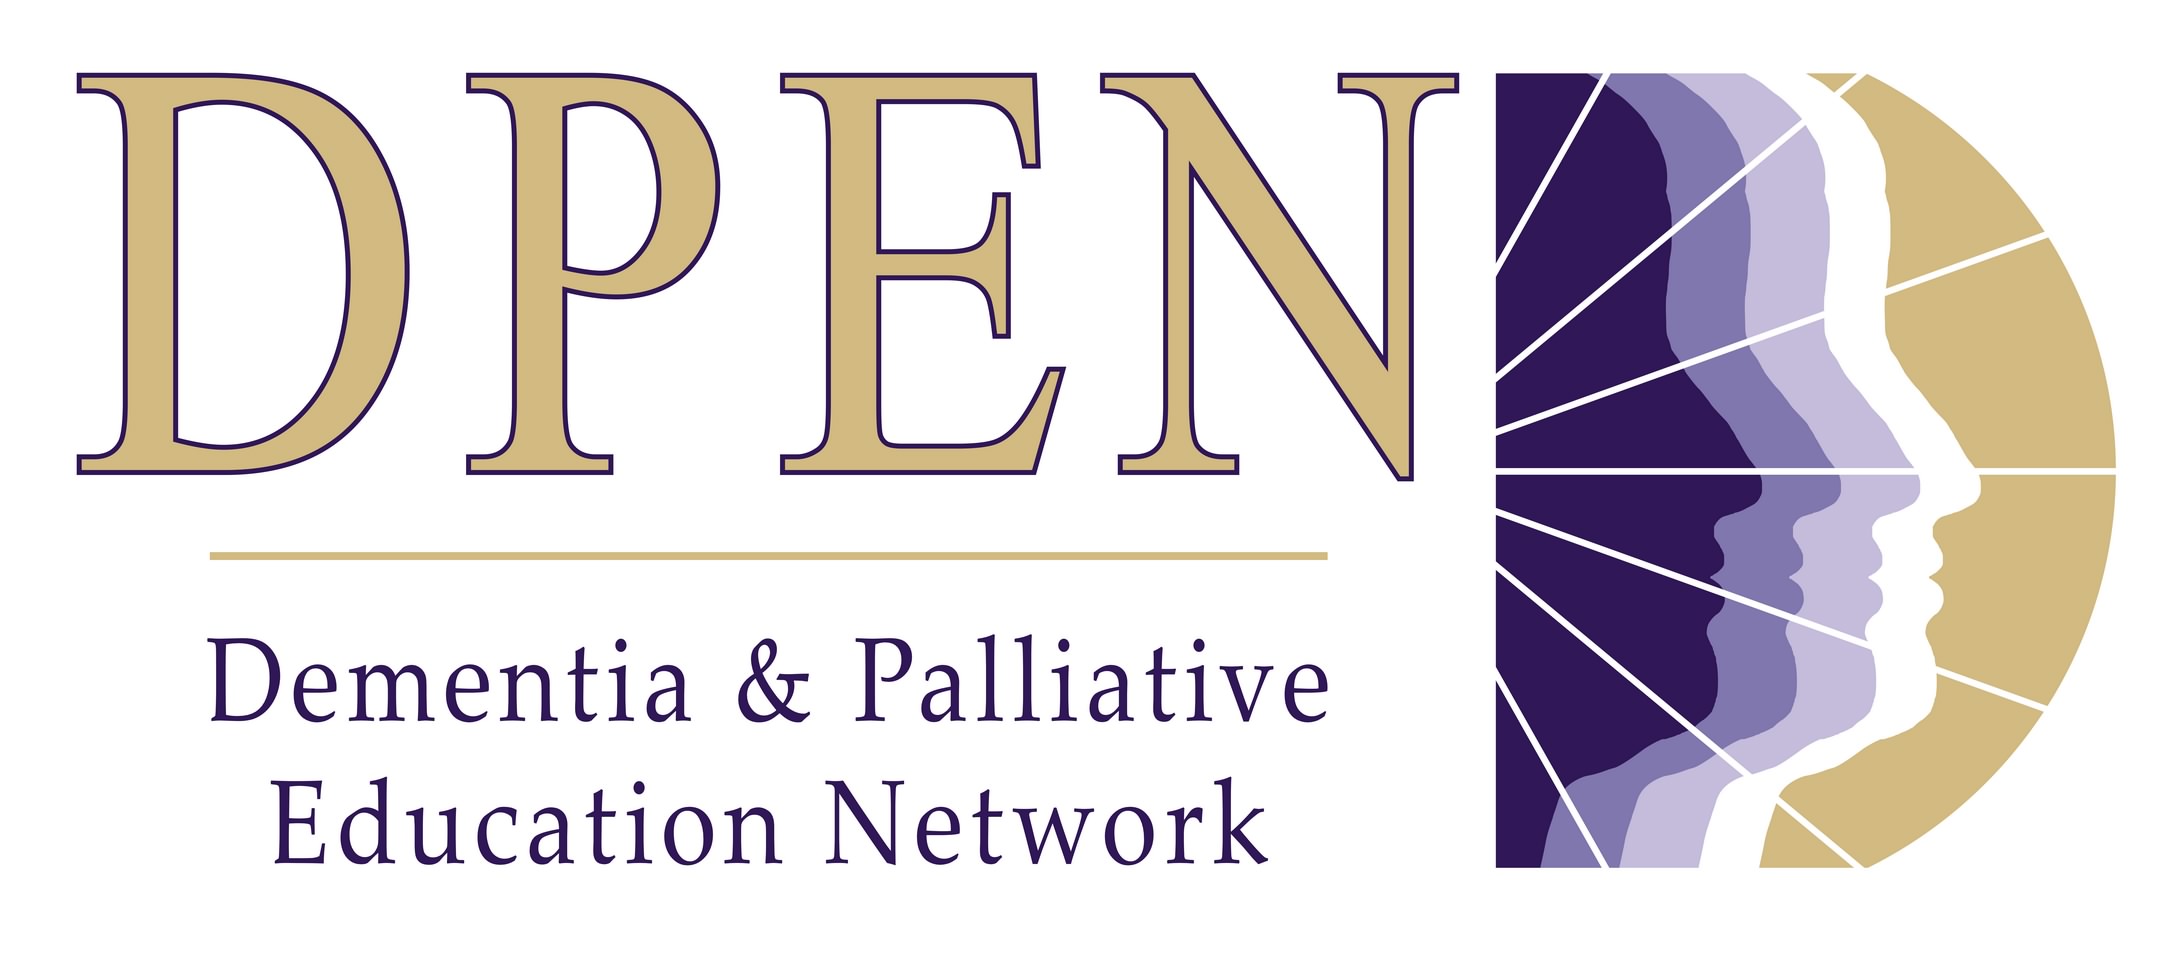 Dementia and Palliative Education Network logo